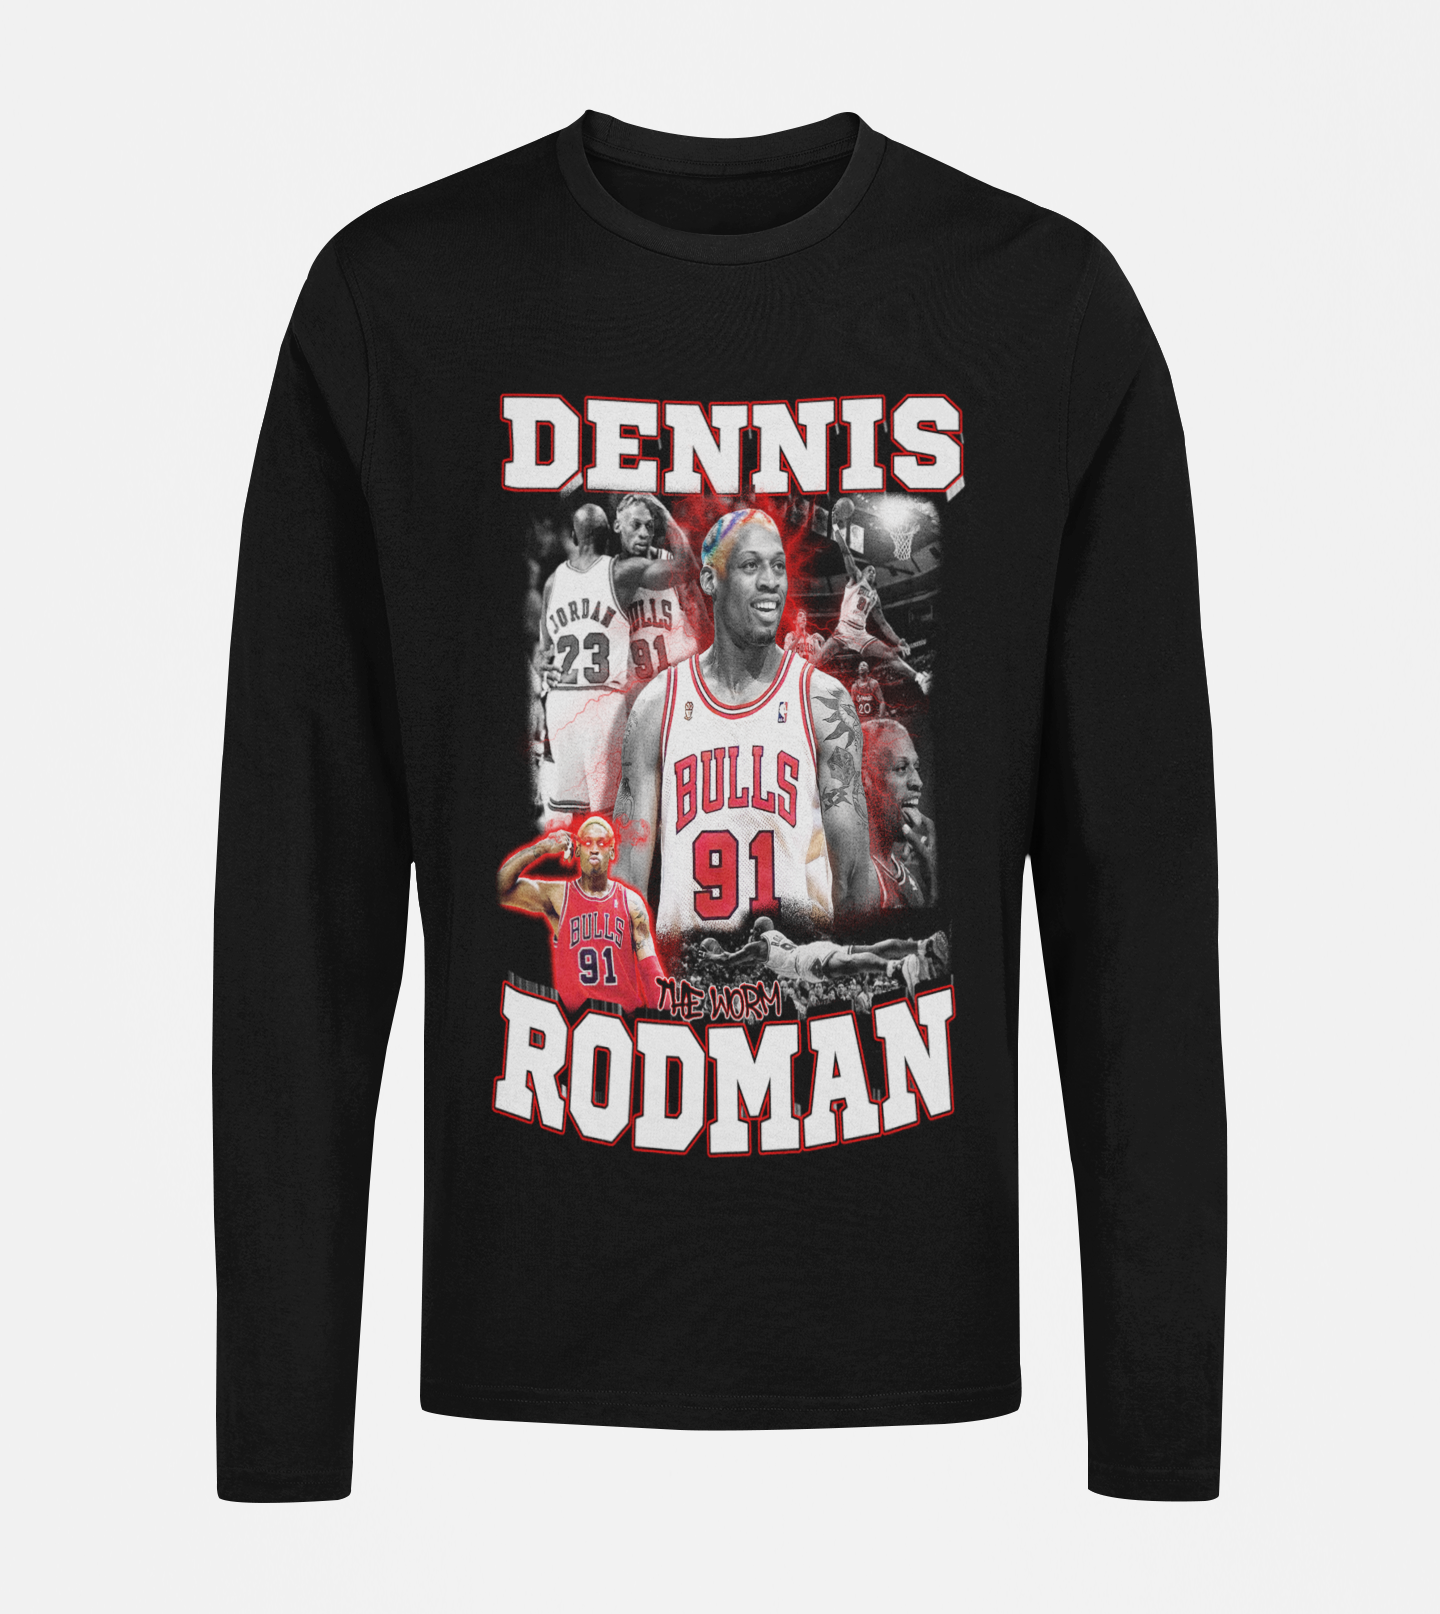 Dennis Rodman: The Iconic Bad Boy of Basketball